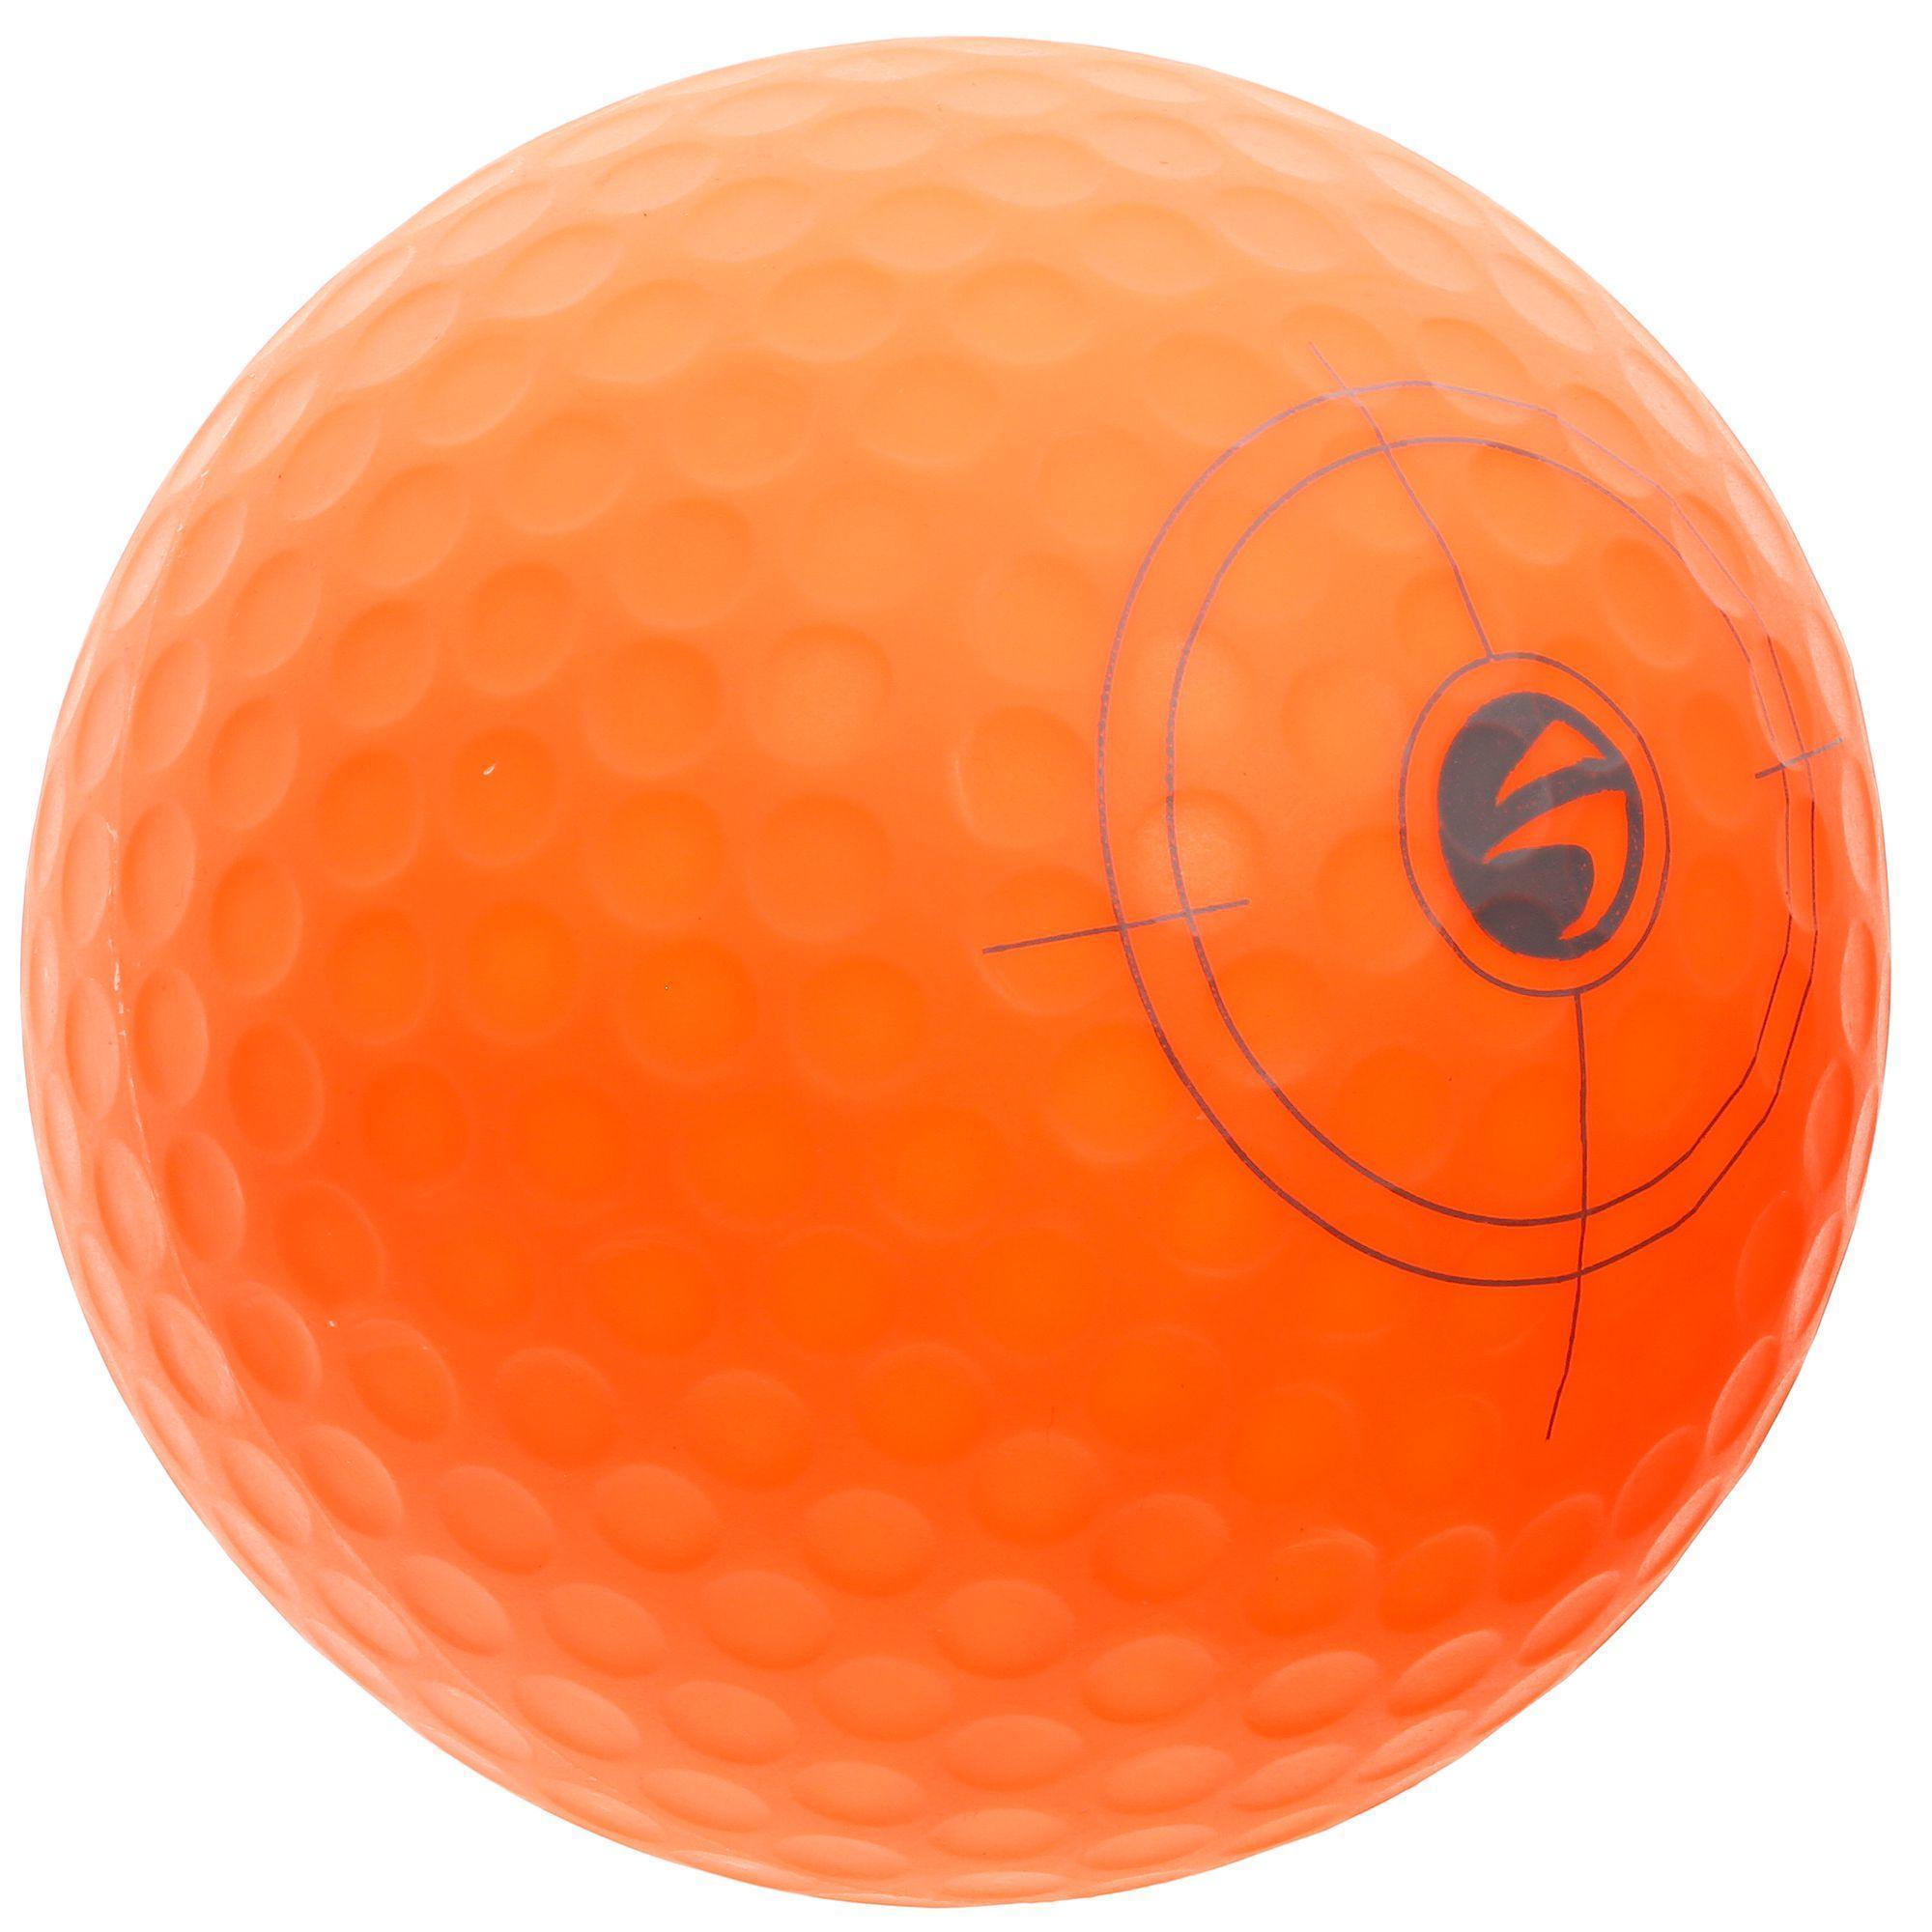 decathlon golf ball